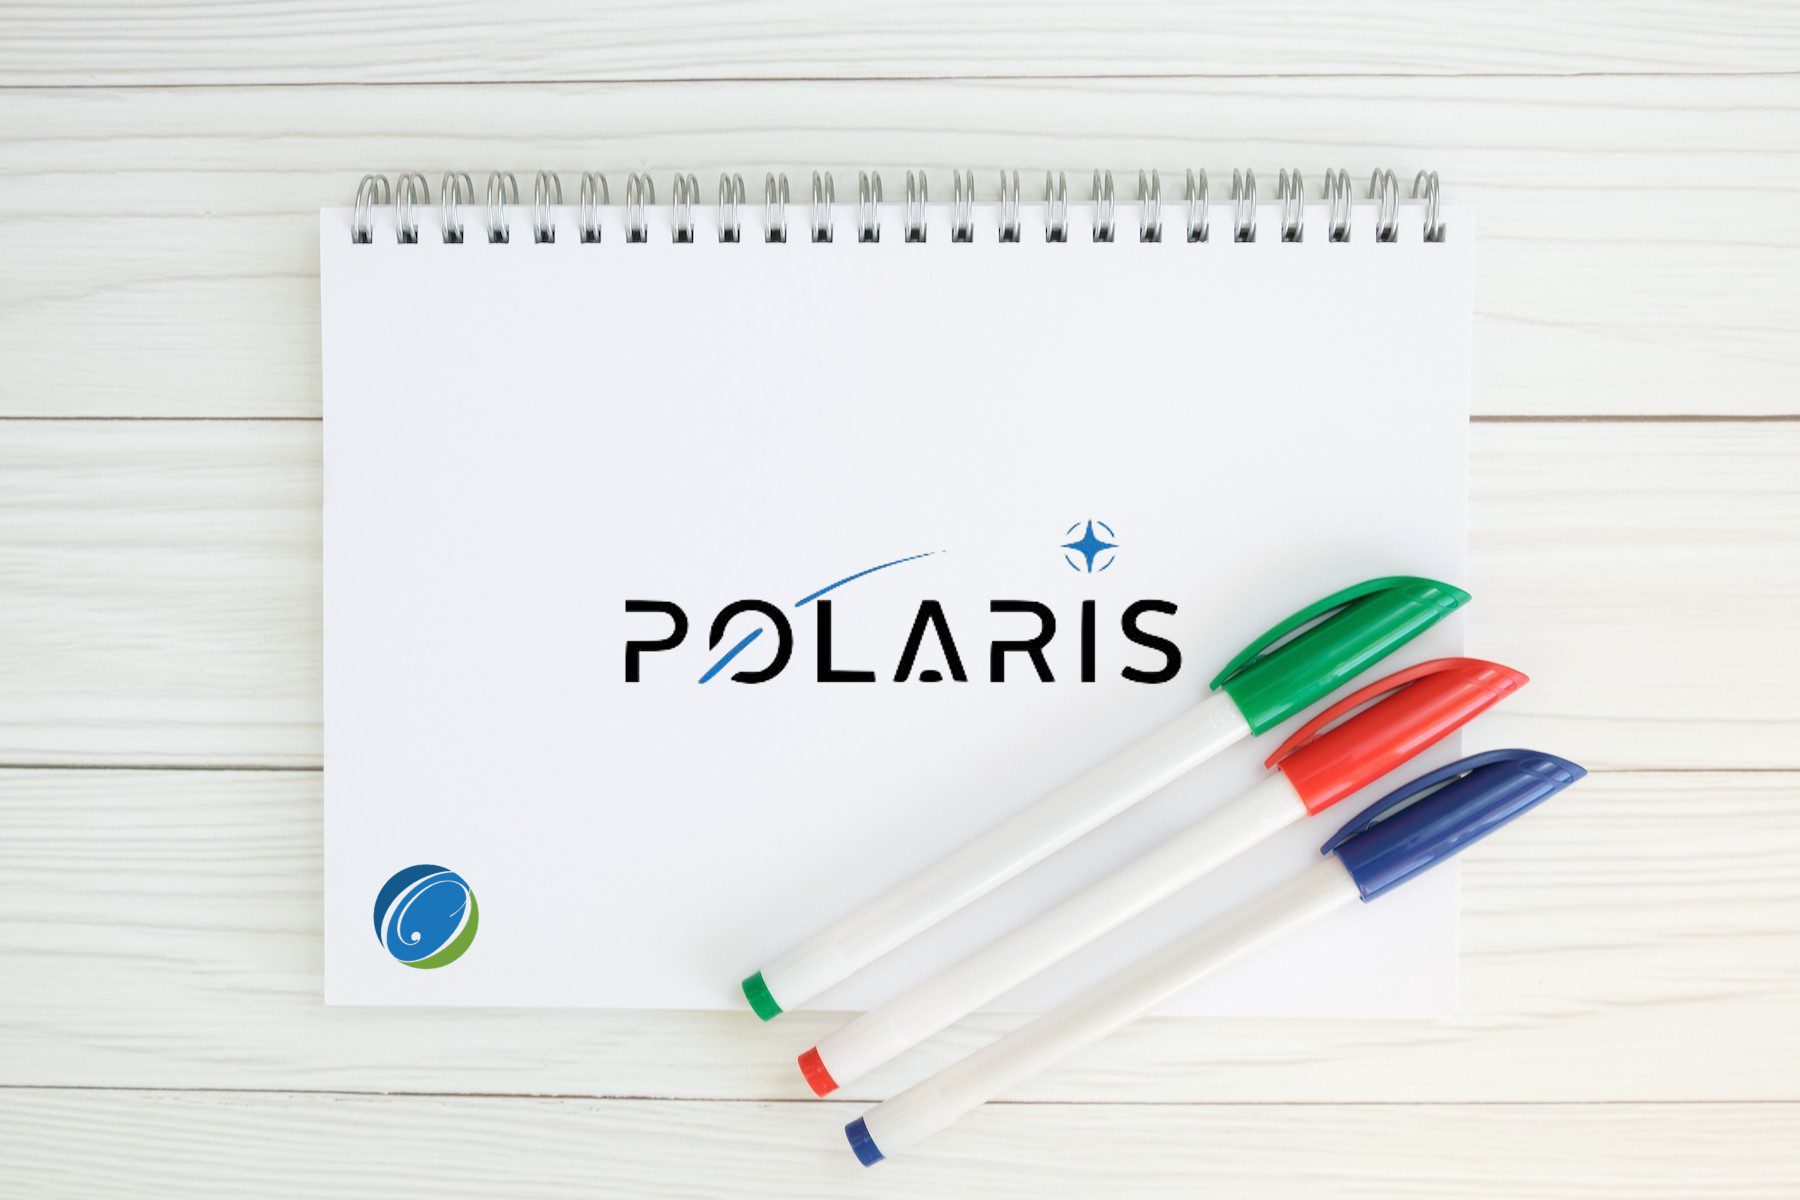 Update to Latest Polaris Solicitations